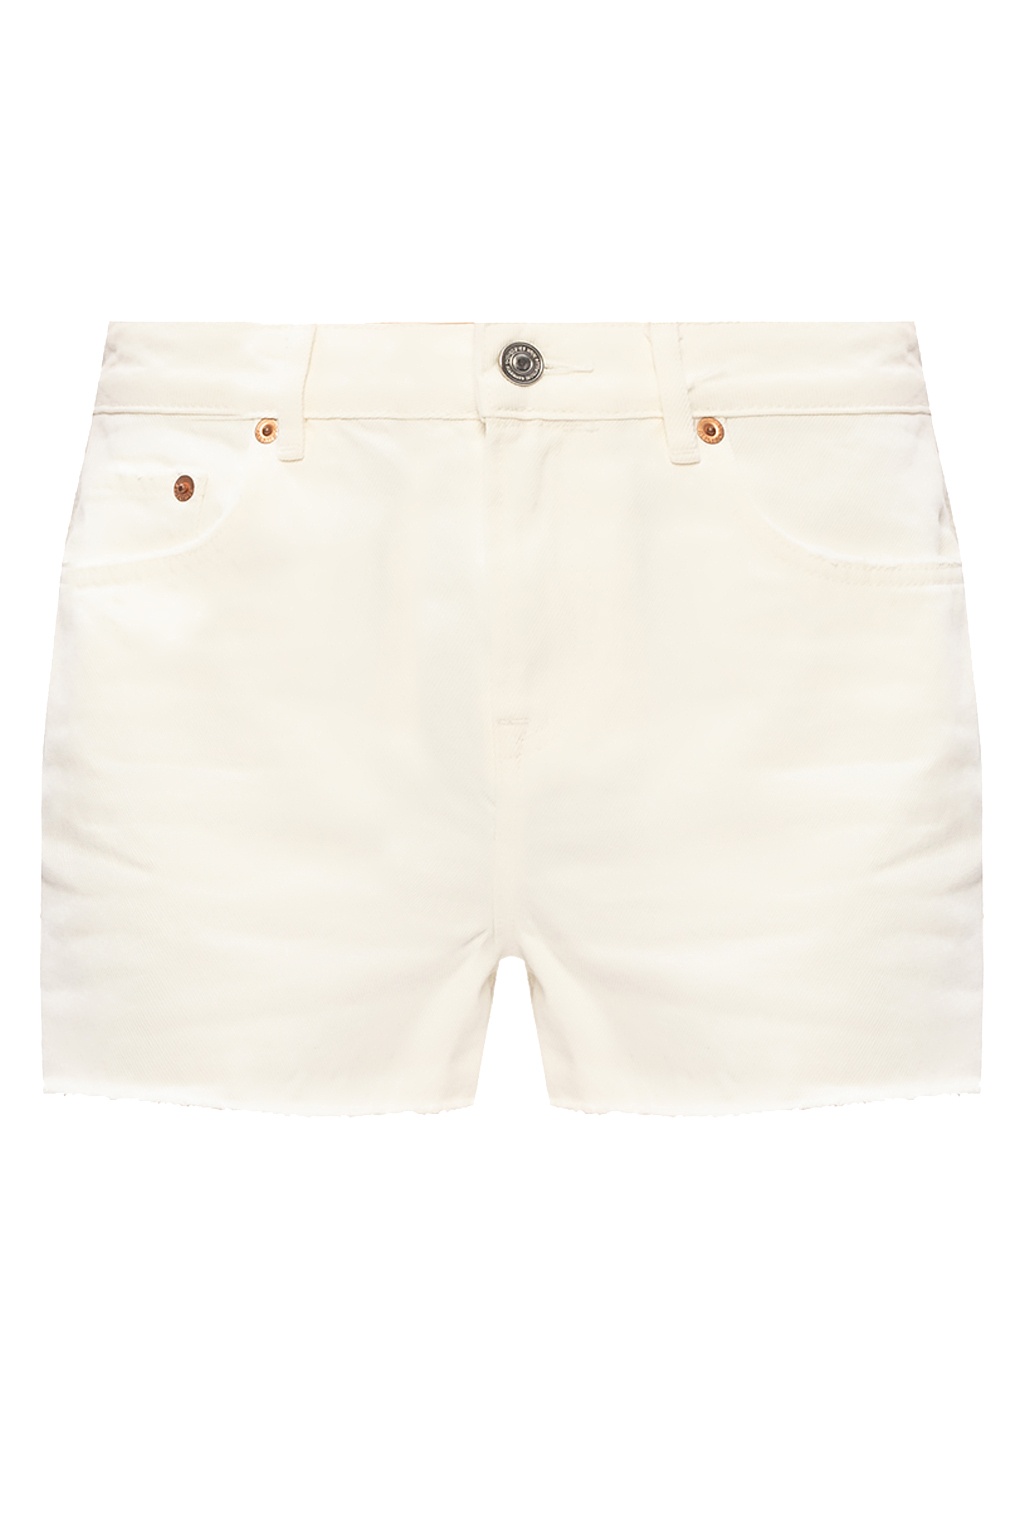 AllSaints ‘Serene’ raw edge shorts